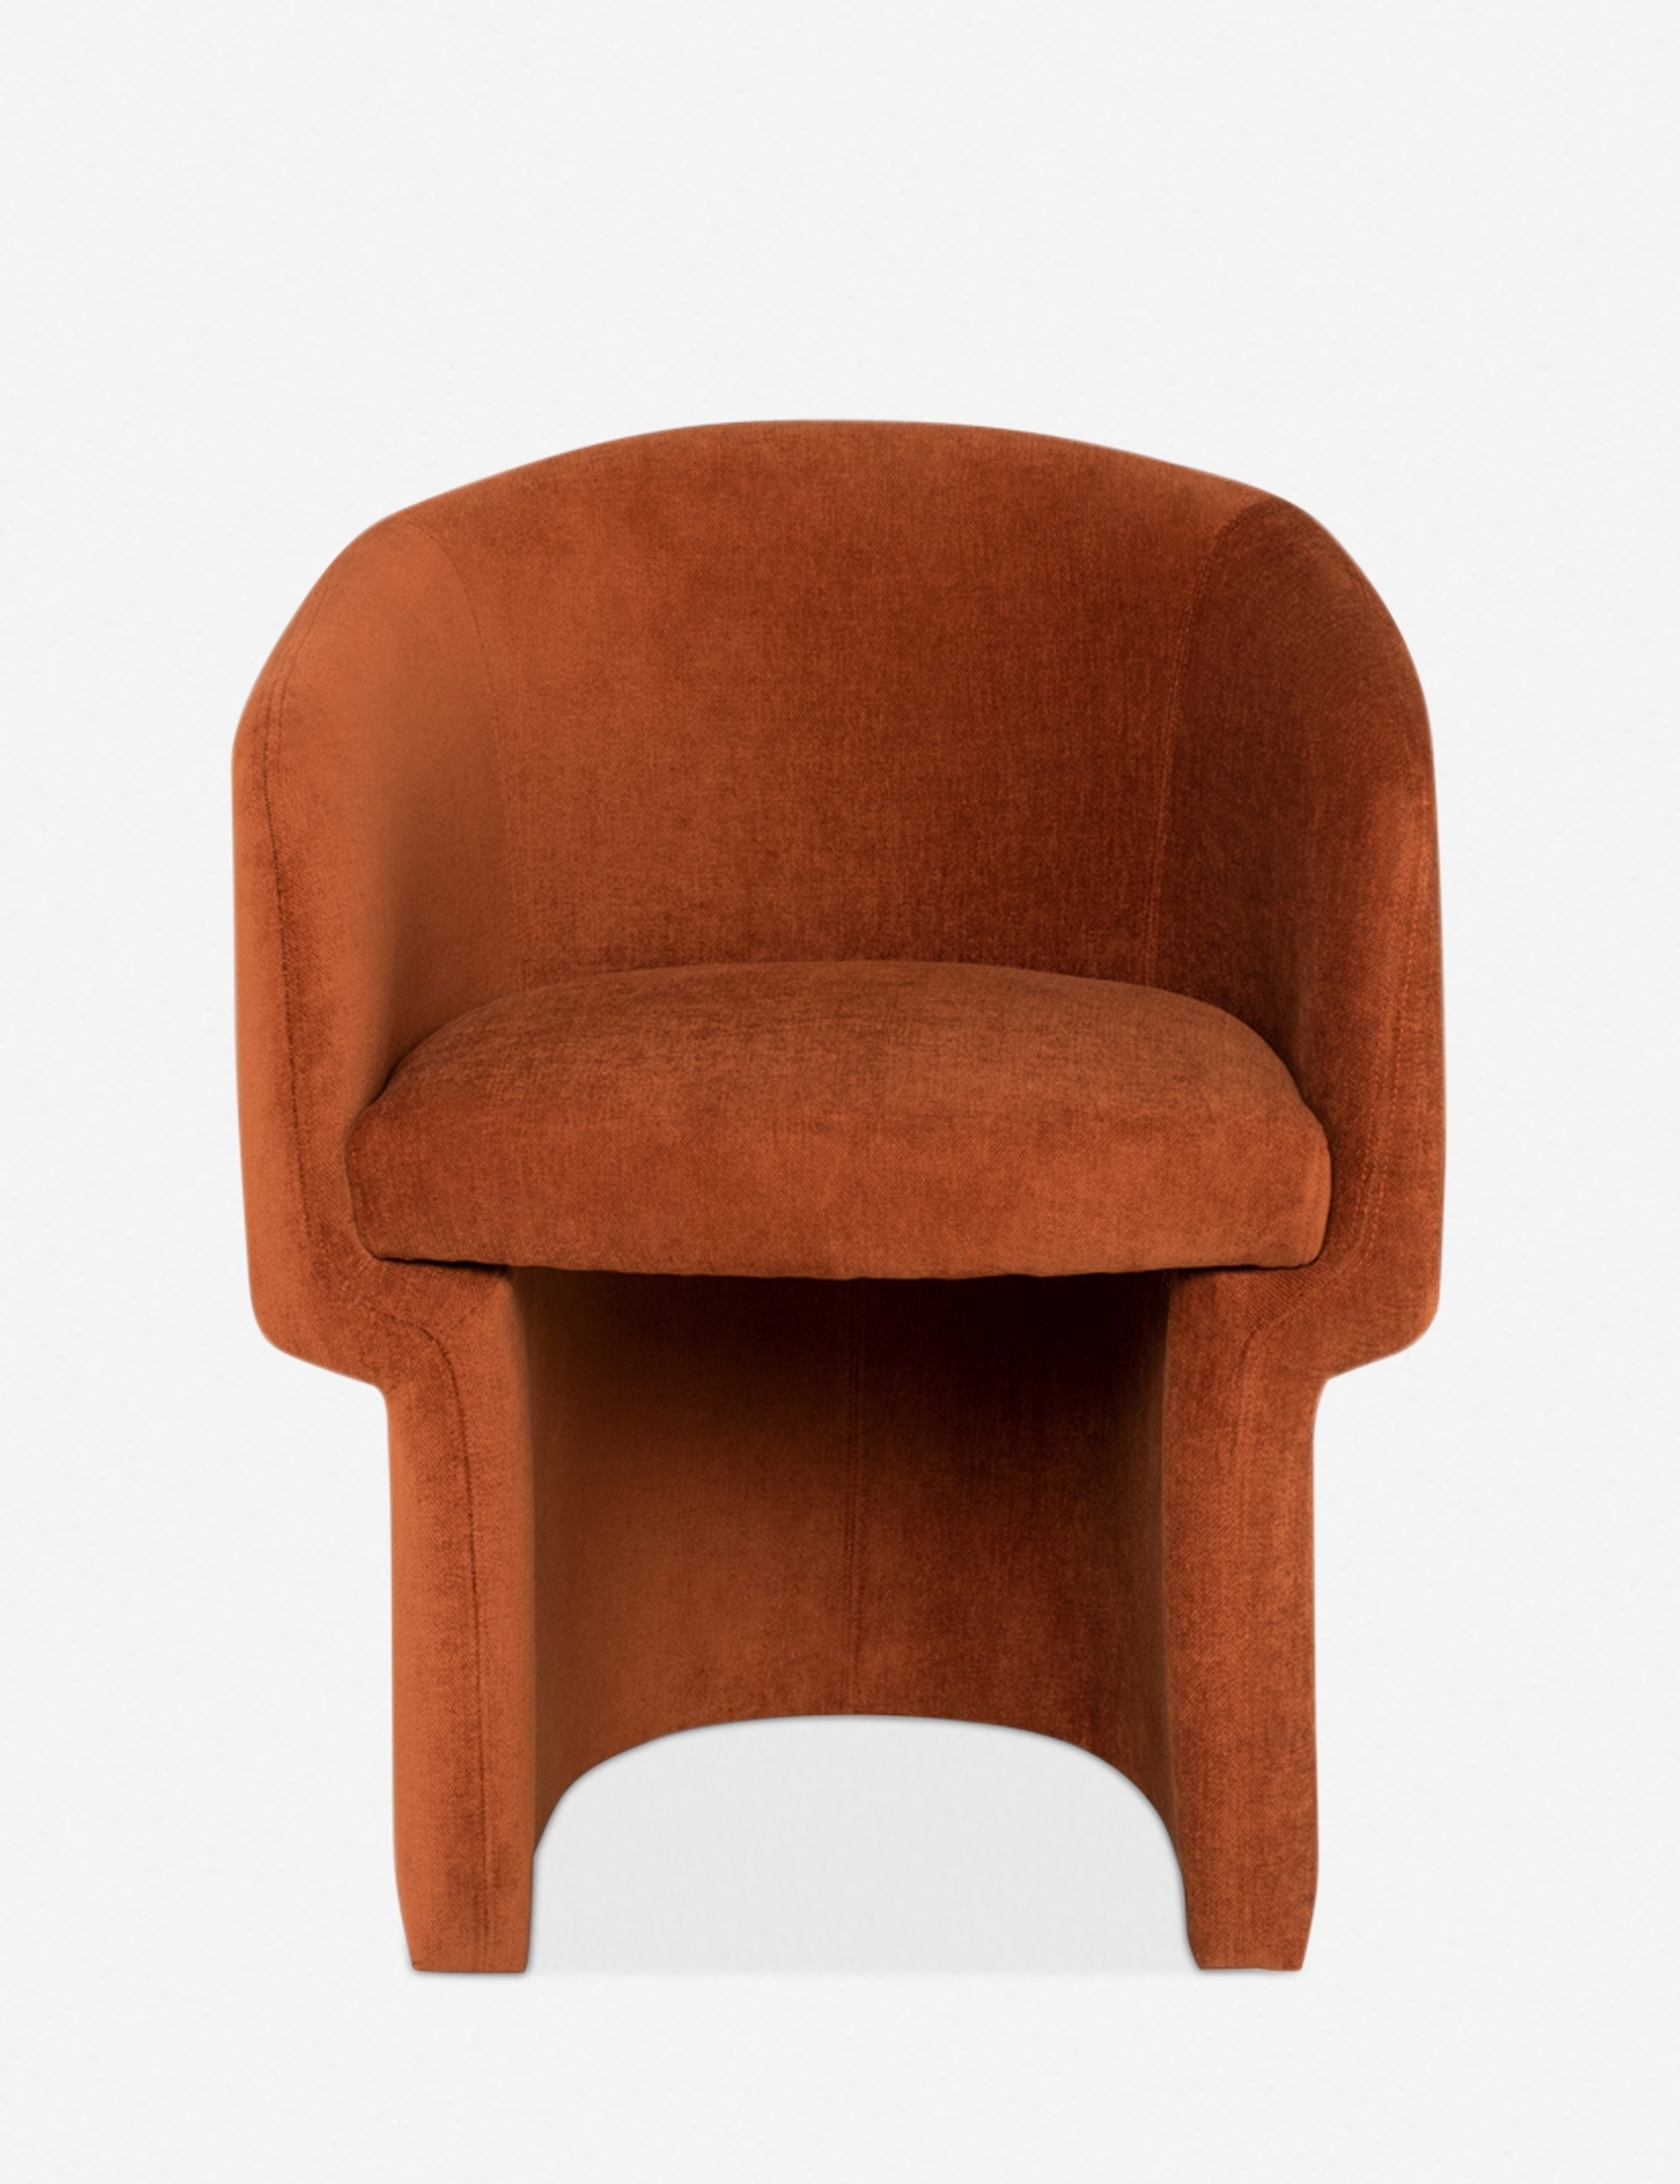 Pomona Dining Chair, Terracotta - Image 0